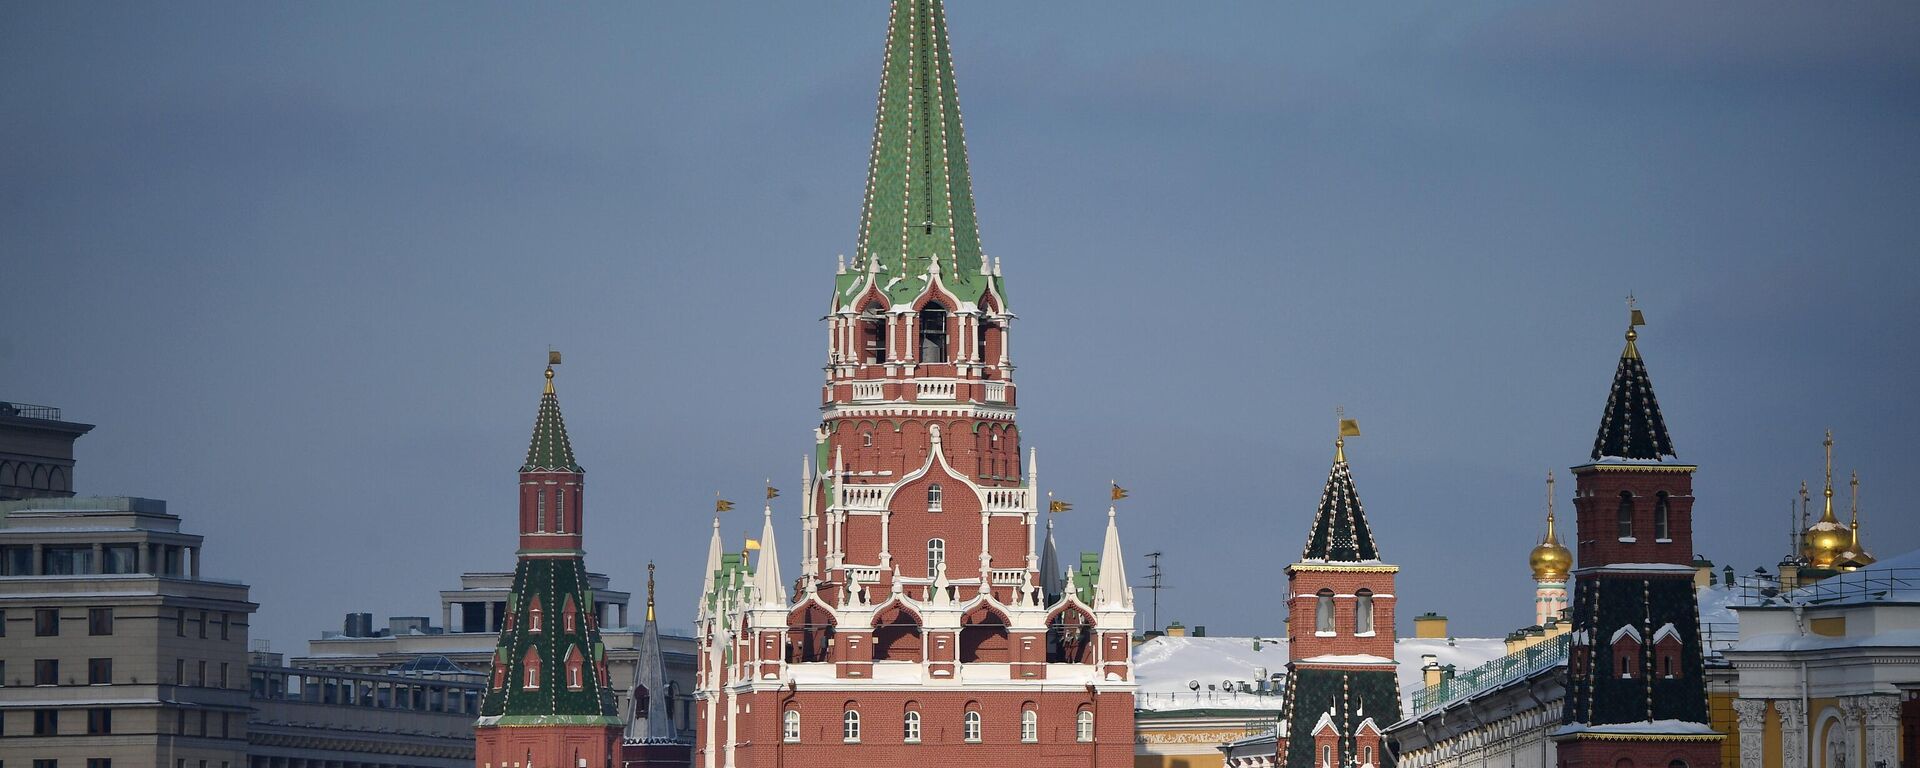 El Kremlin de Moscú, Rusia - Sputnik Mundo, 1920, 12.12.2021